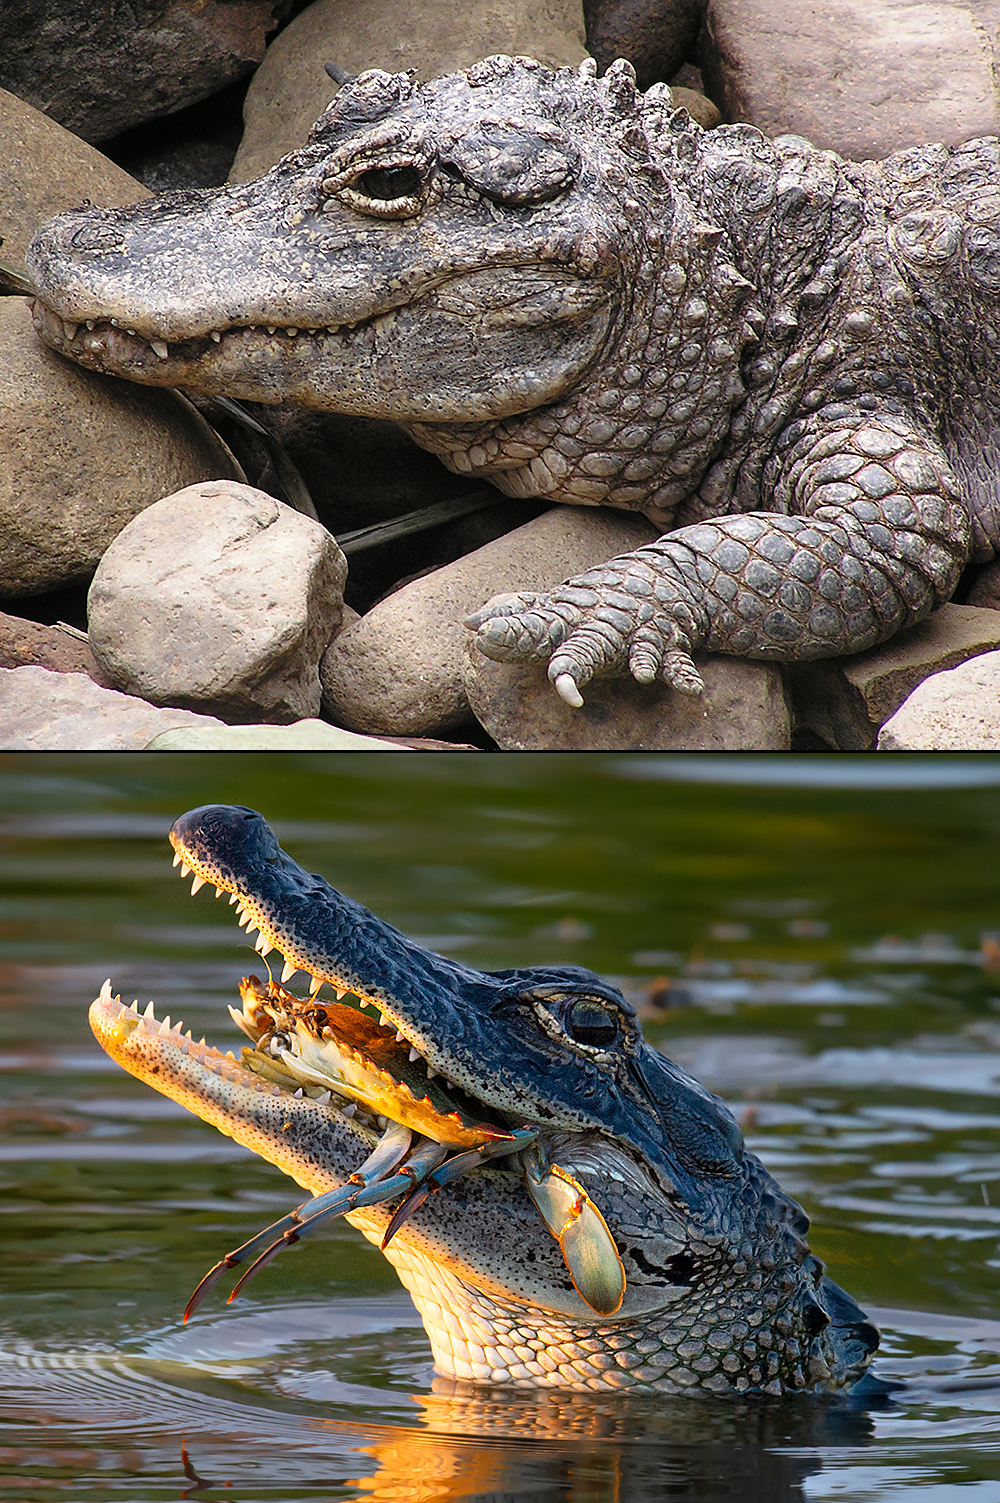 Chinese Alligator and American Alligator